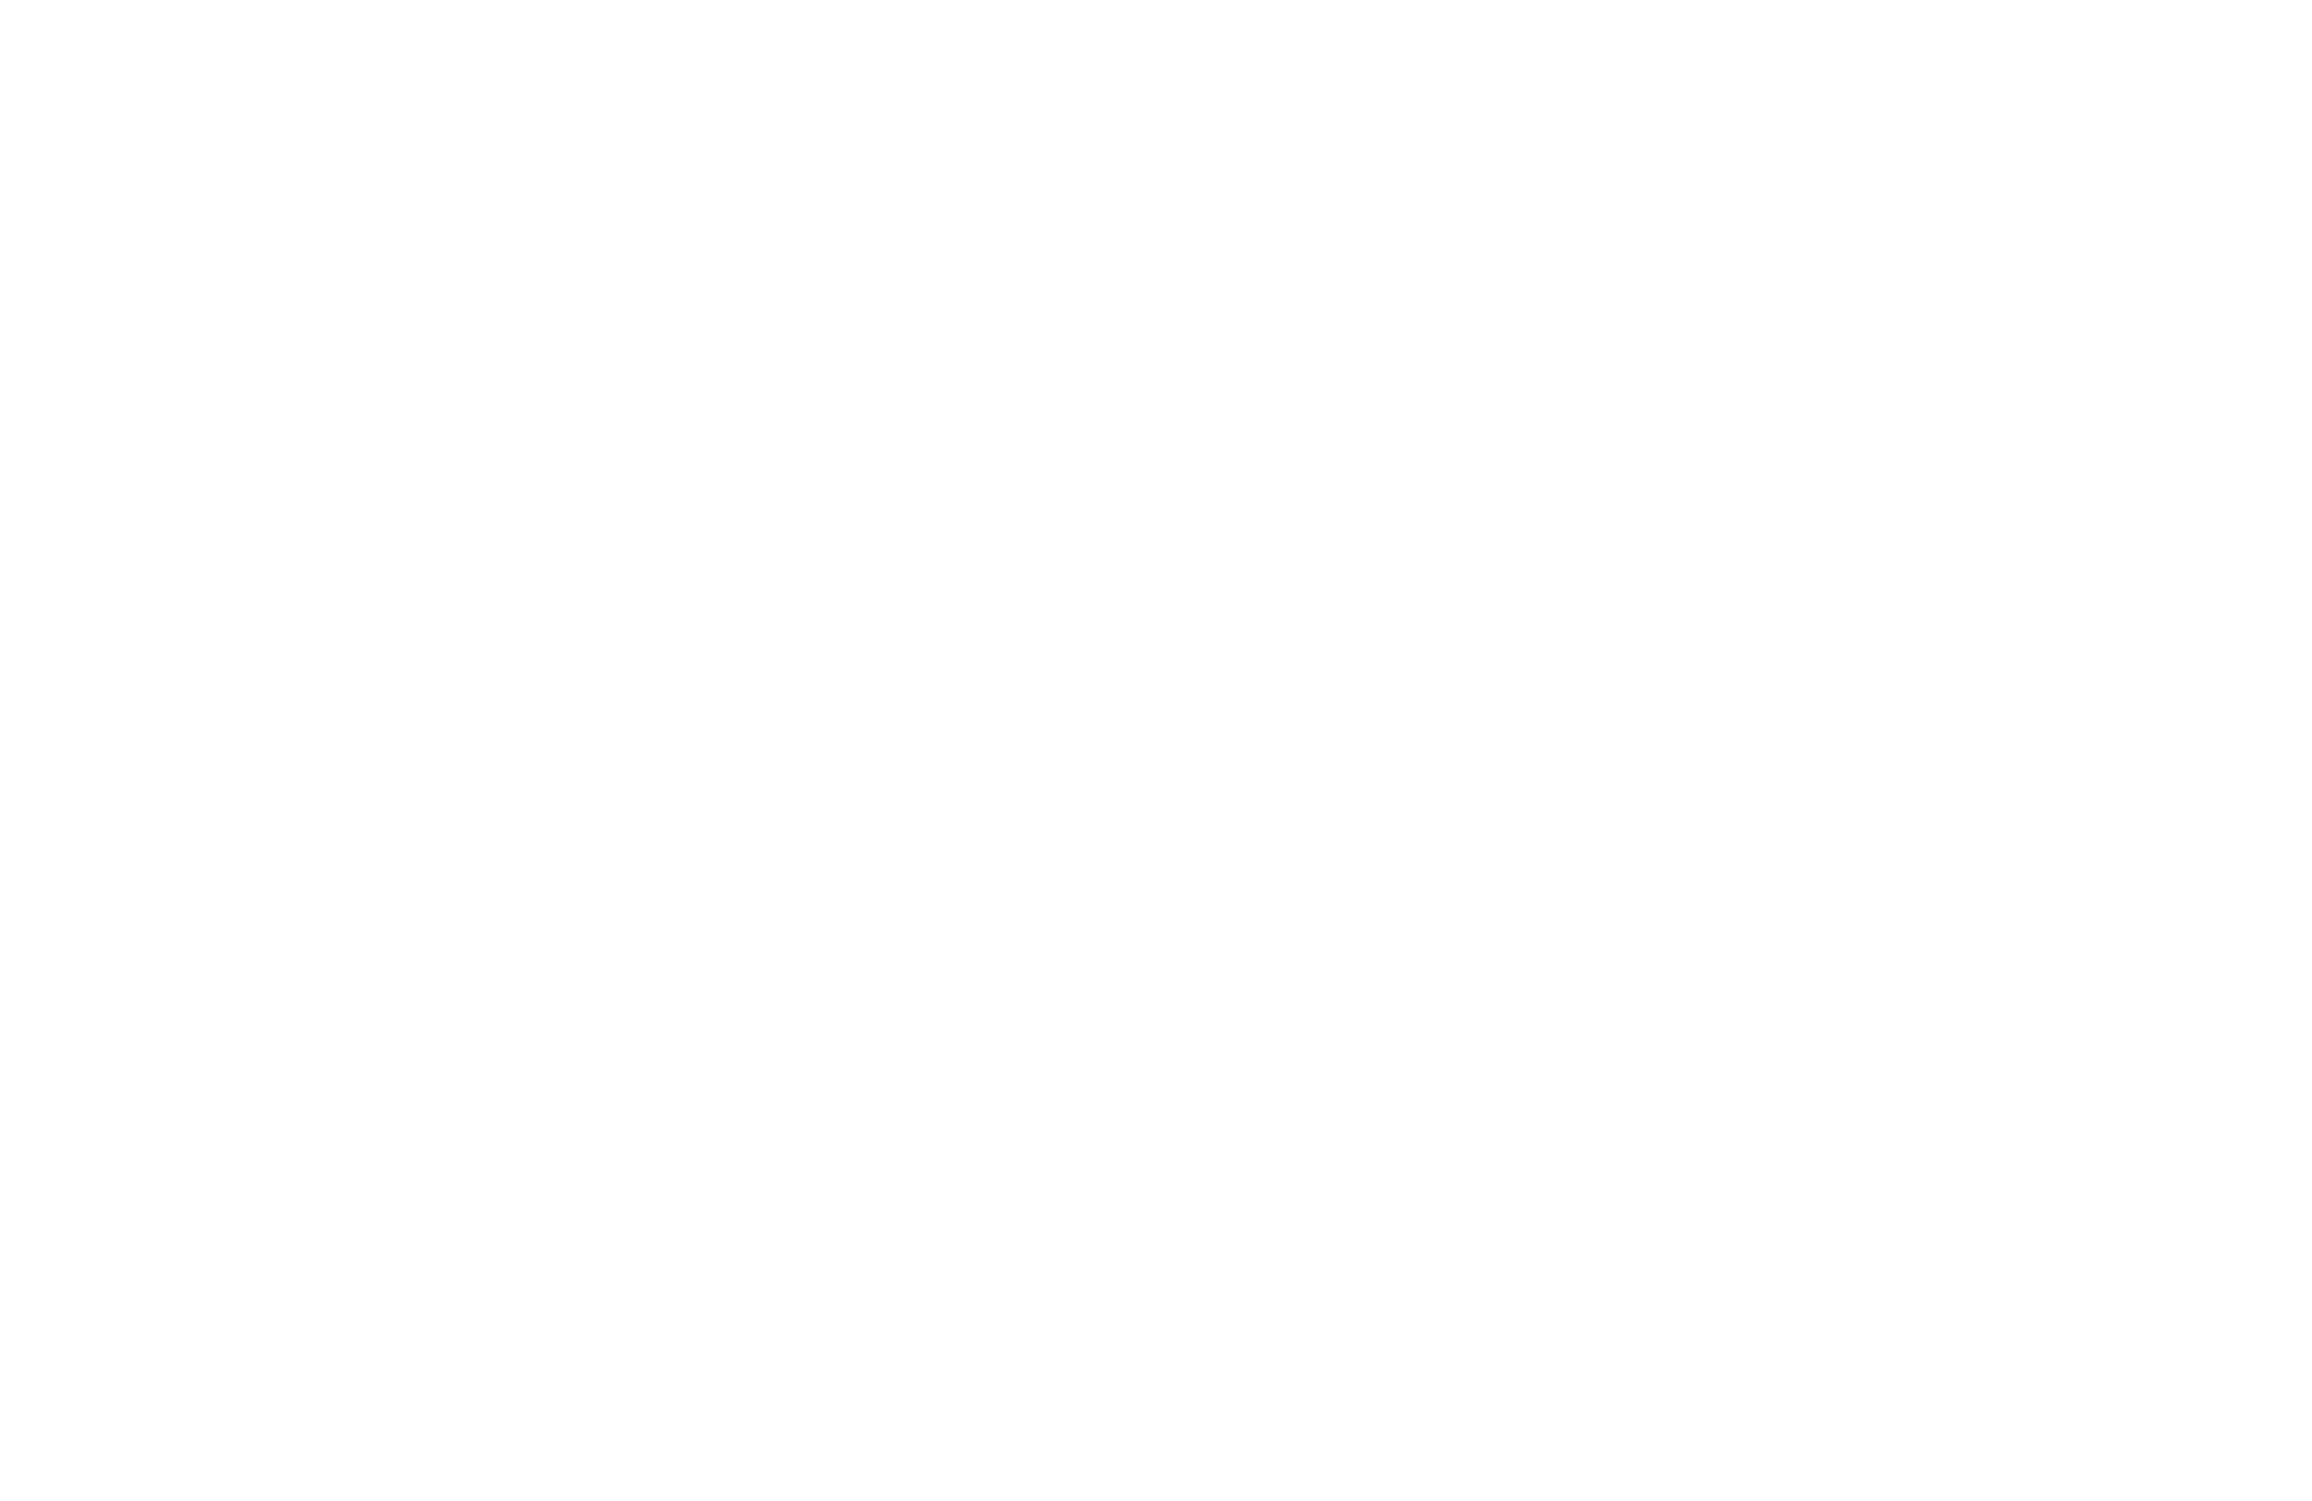 Solstar Space Co